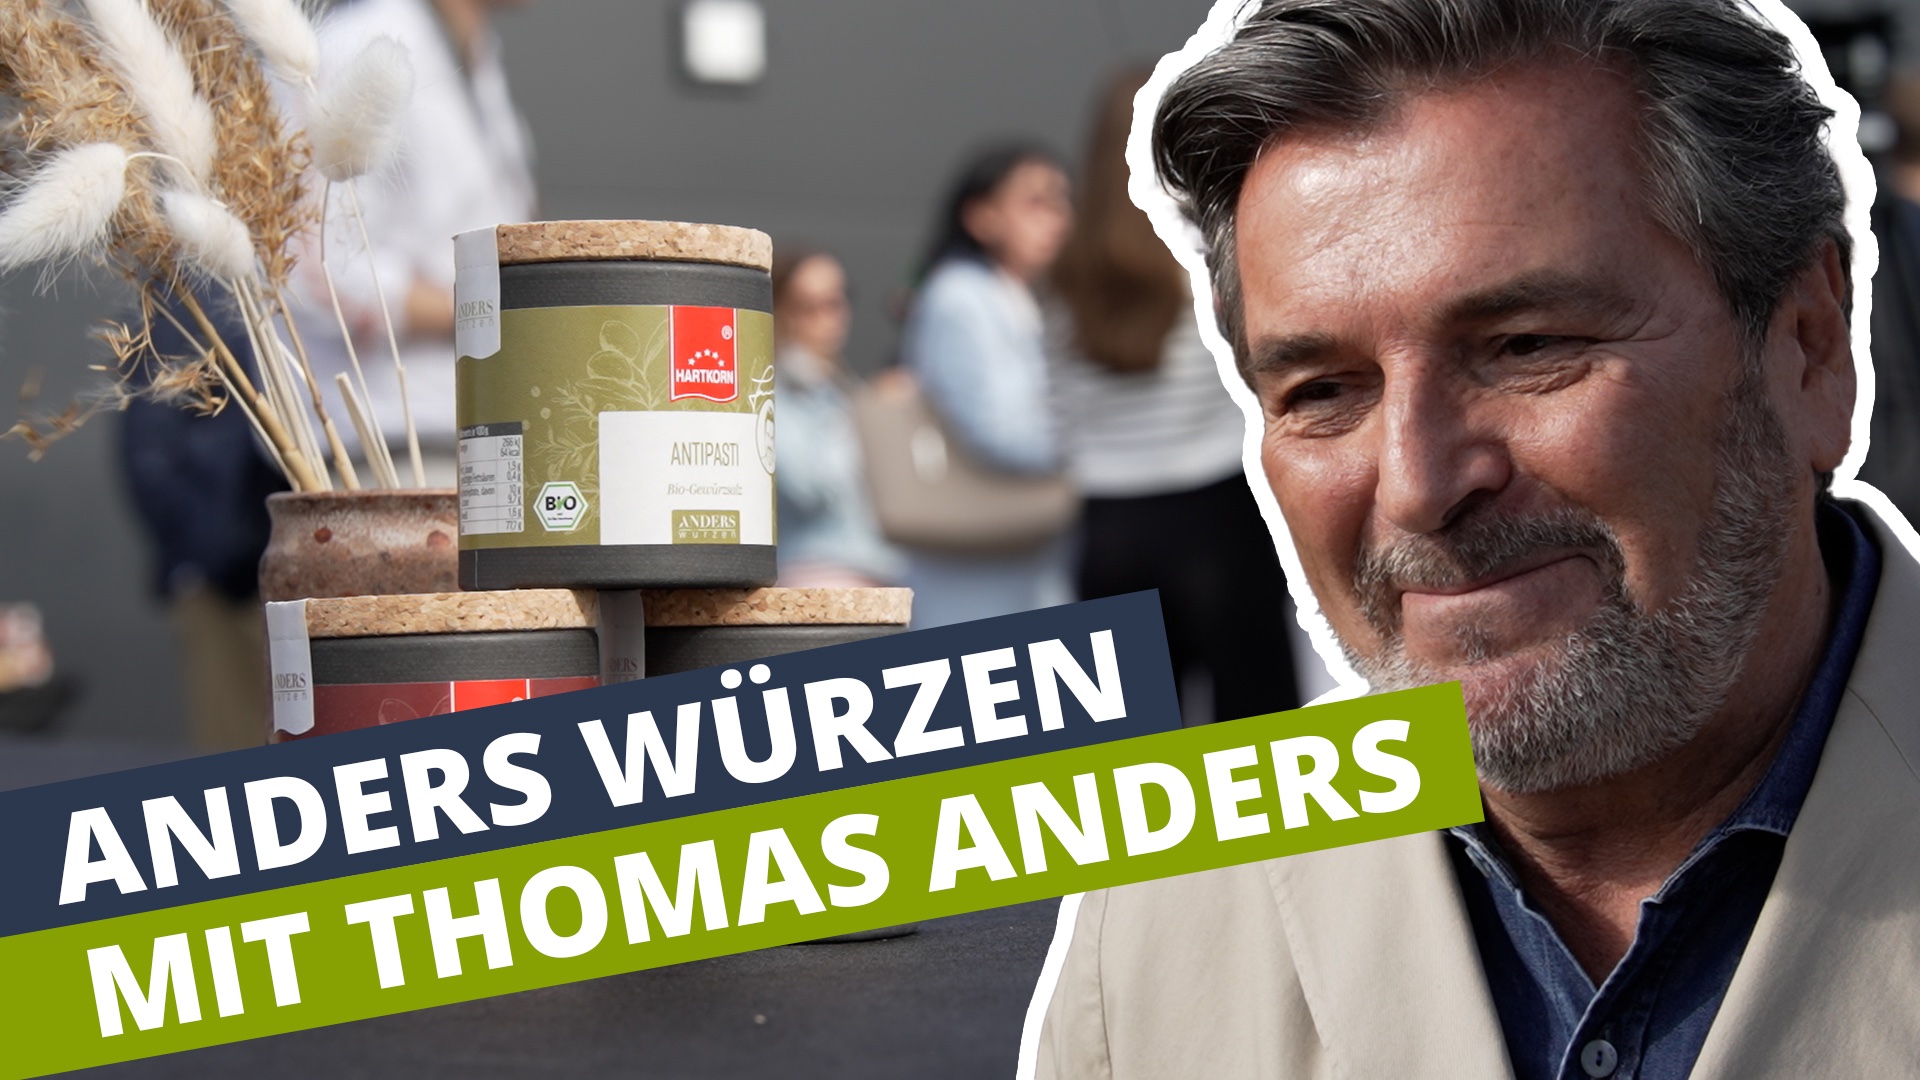 Thomas Anders präsentiert neue Gewürzproduktlinie "Anders Würzen"